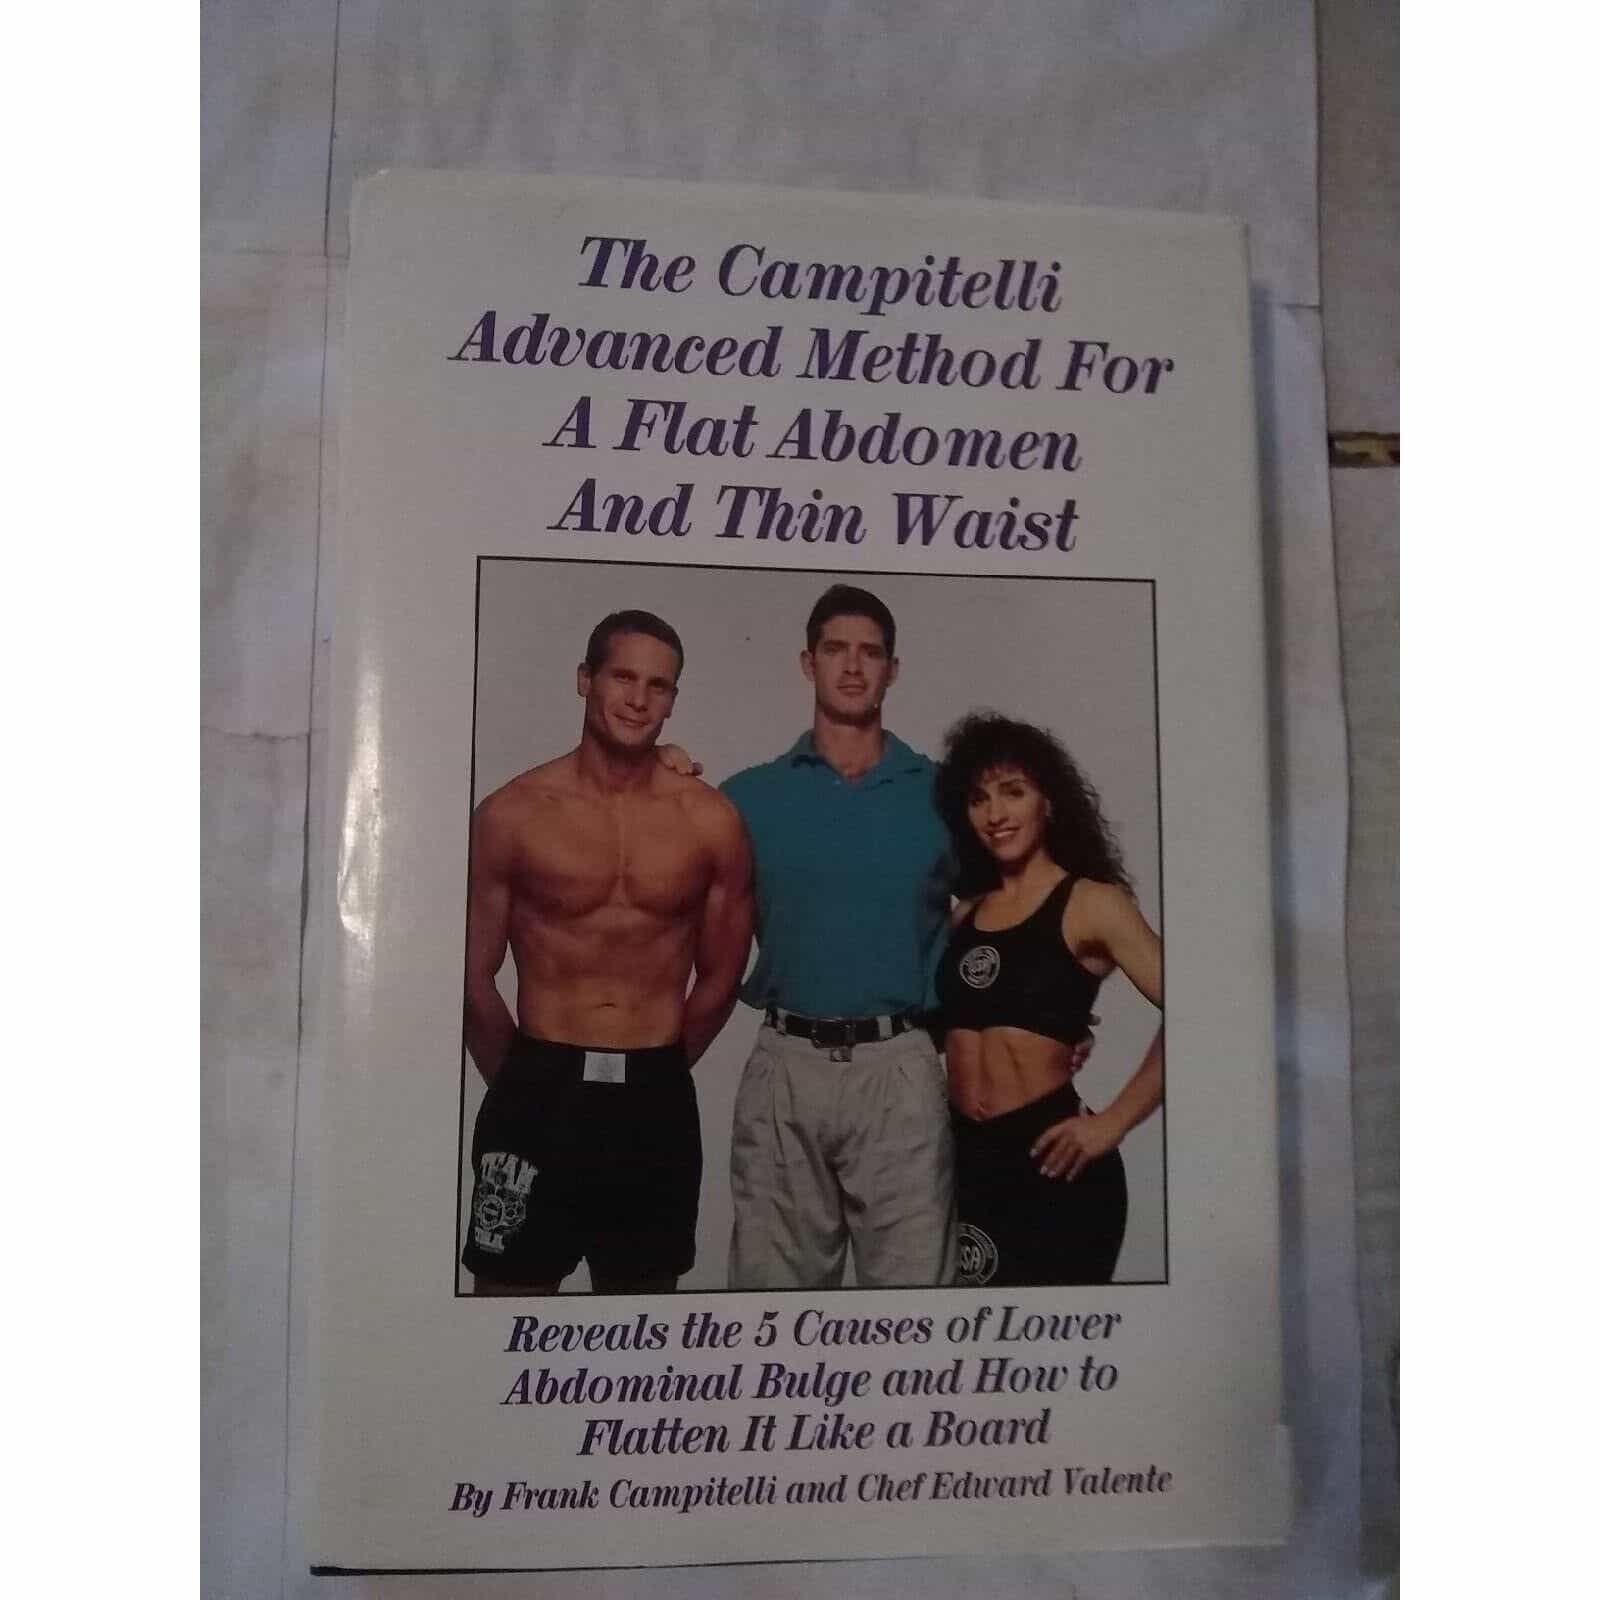 The Campitelli Method For A Flat Abdomen & Thin Waist by Frank Campitelli